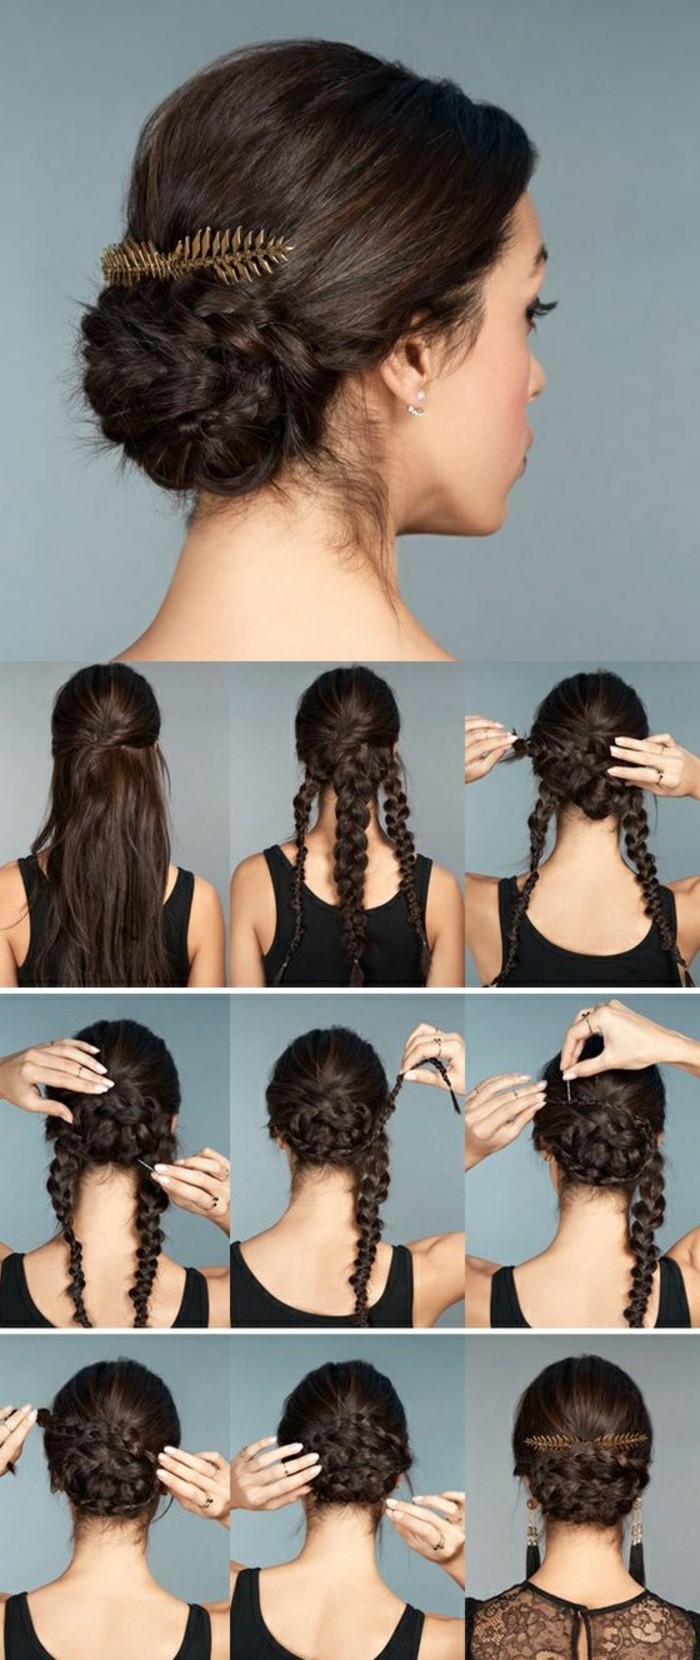 3-updo hairstyles-εγχειρίδιο-σκούρο καφέ-μακράς μαλλιά-κόμμωση-μαύρο-μπλούζα-γυναίκα-πλεξίδες